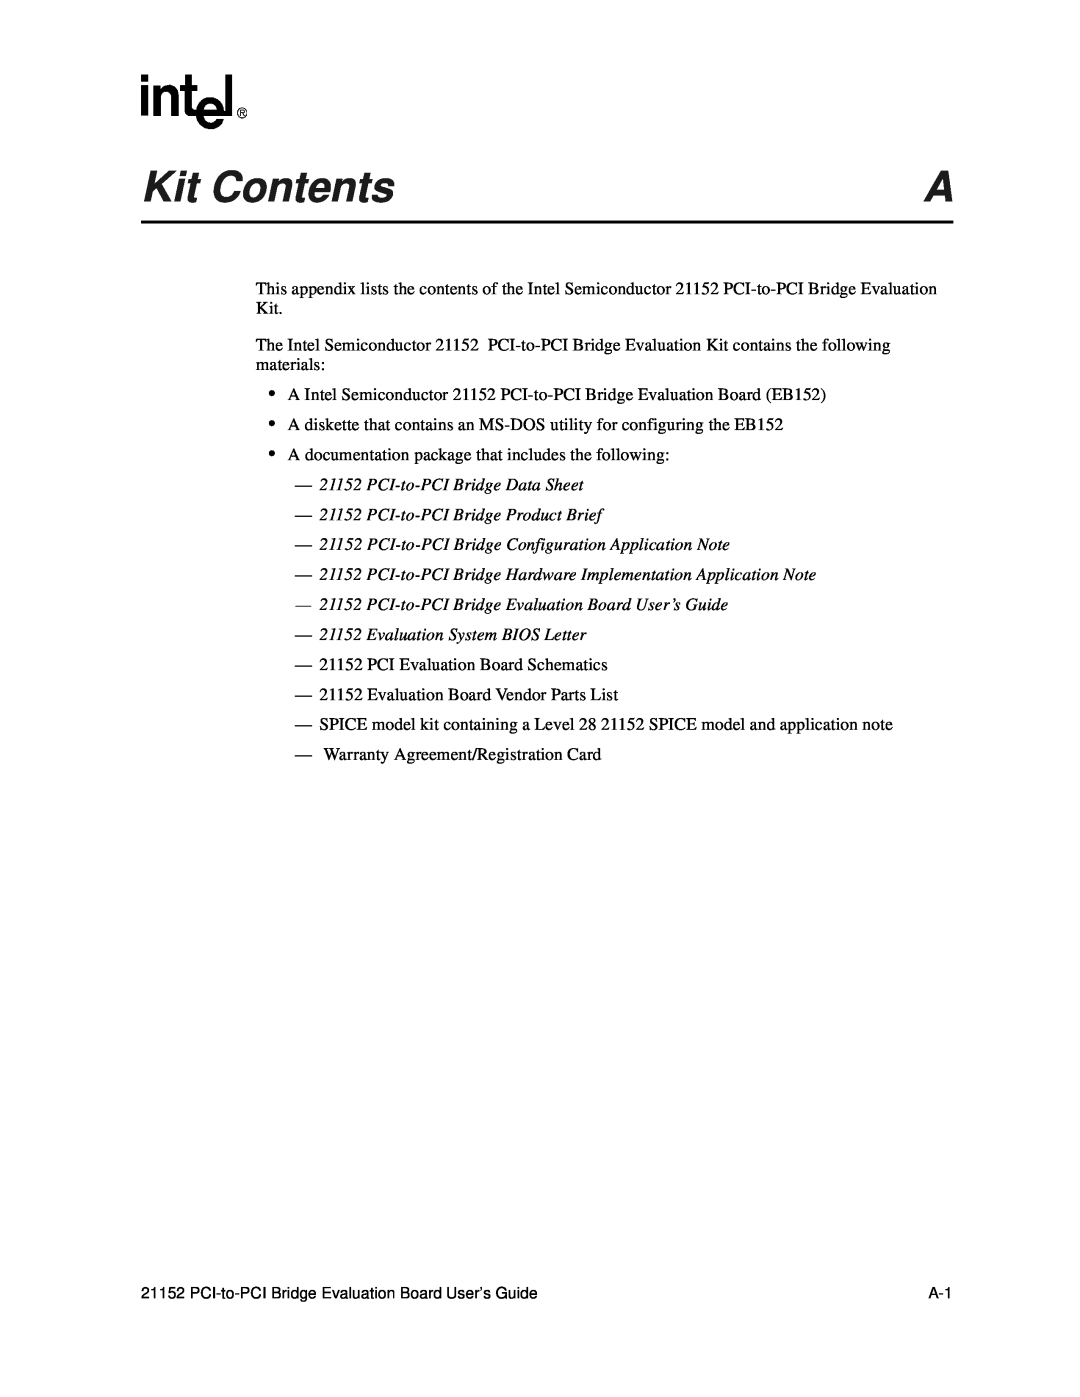 Intel 21152 manual Kit Contents 